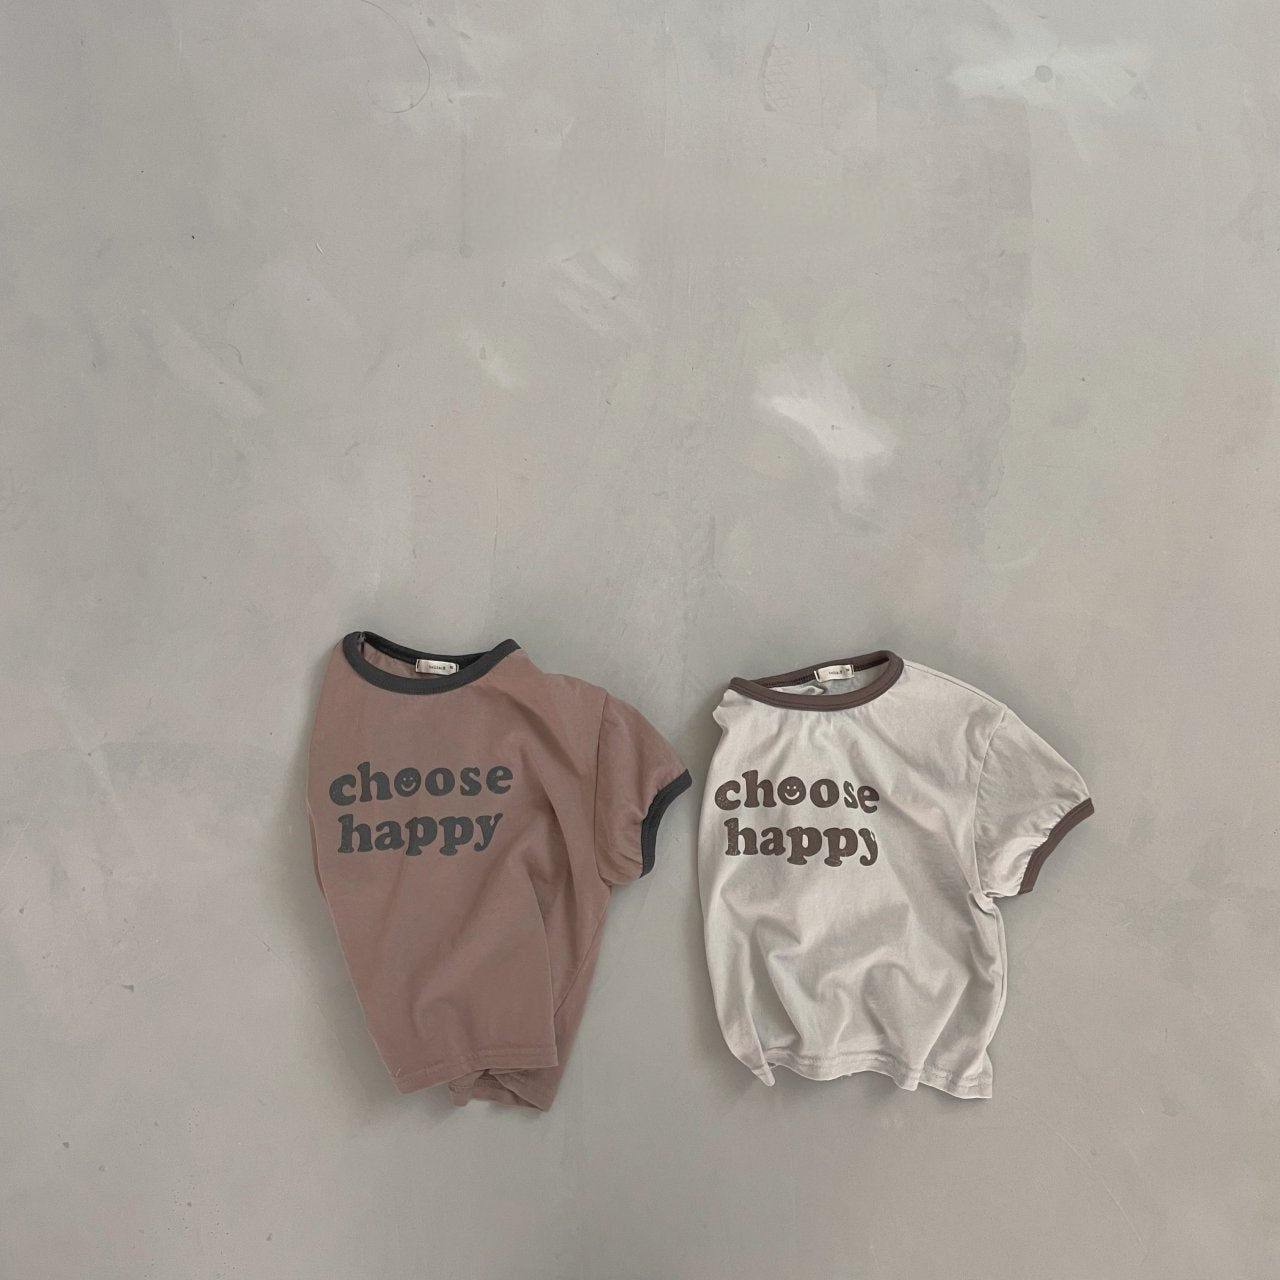 CHOOSE HAPPY - Unisex T-Shirt Collection